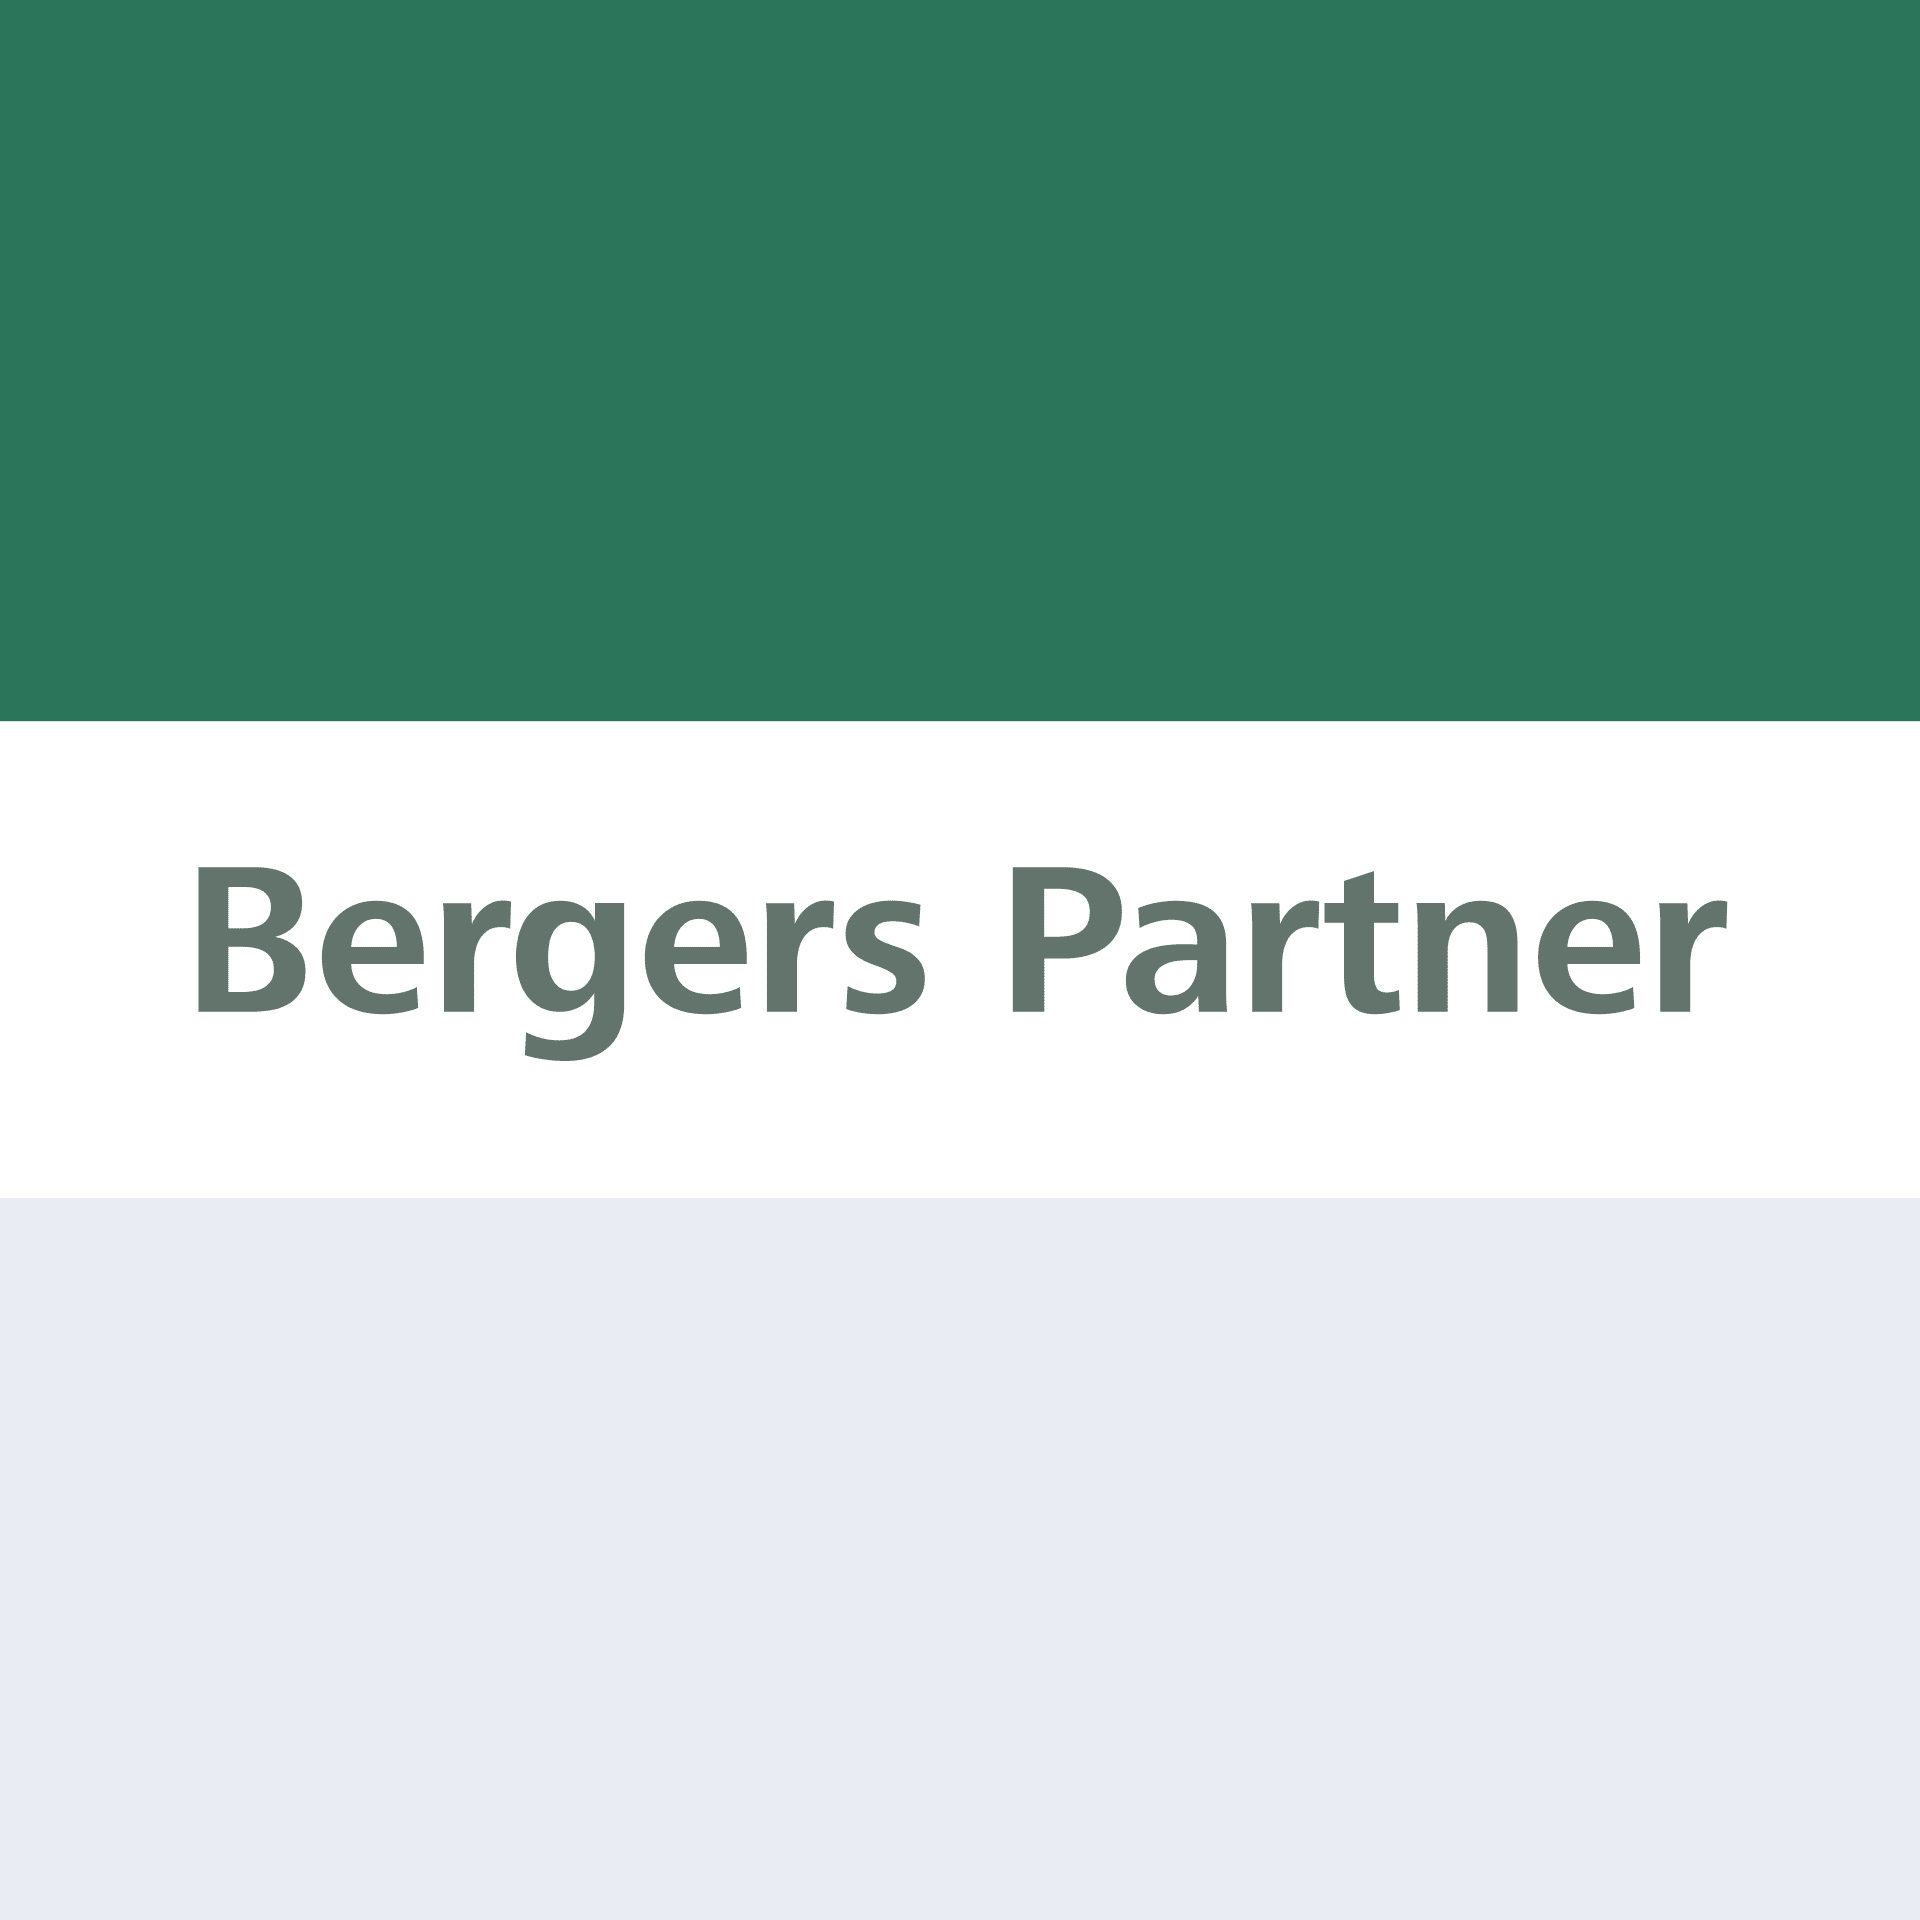 Bergers Partner Steuerberater Wirtschaftsprüfer PartG mbB logo